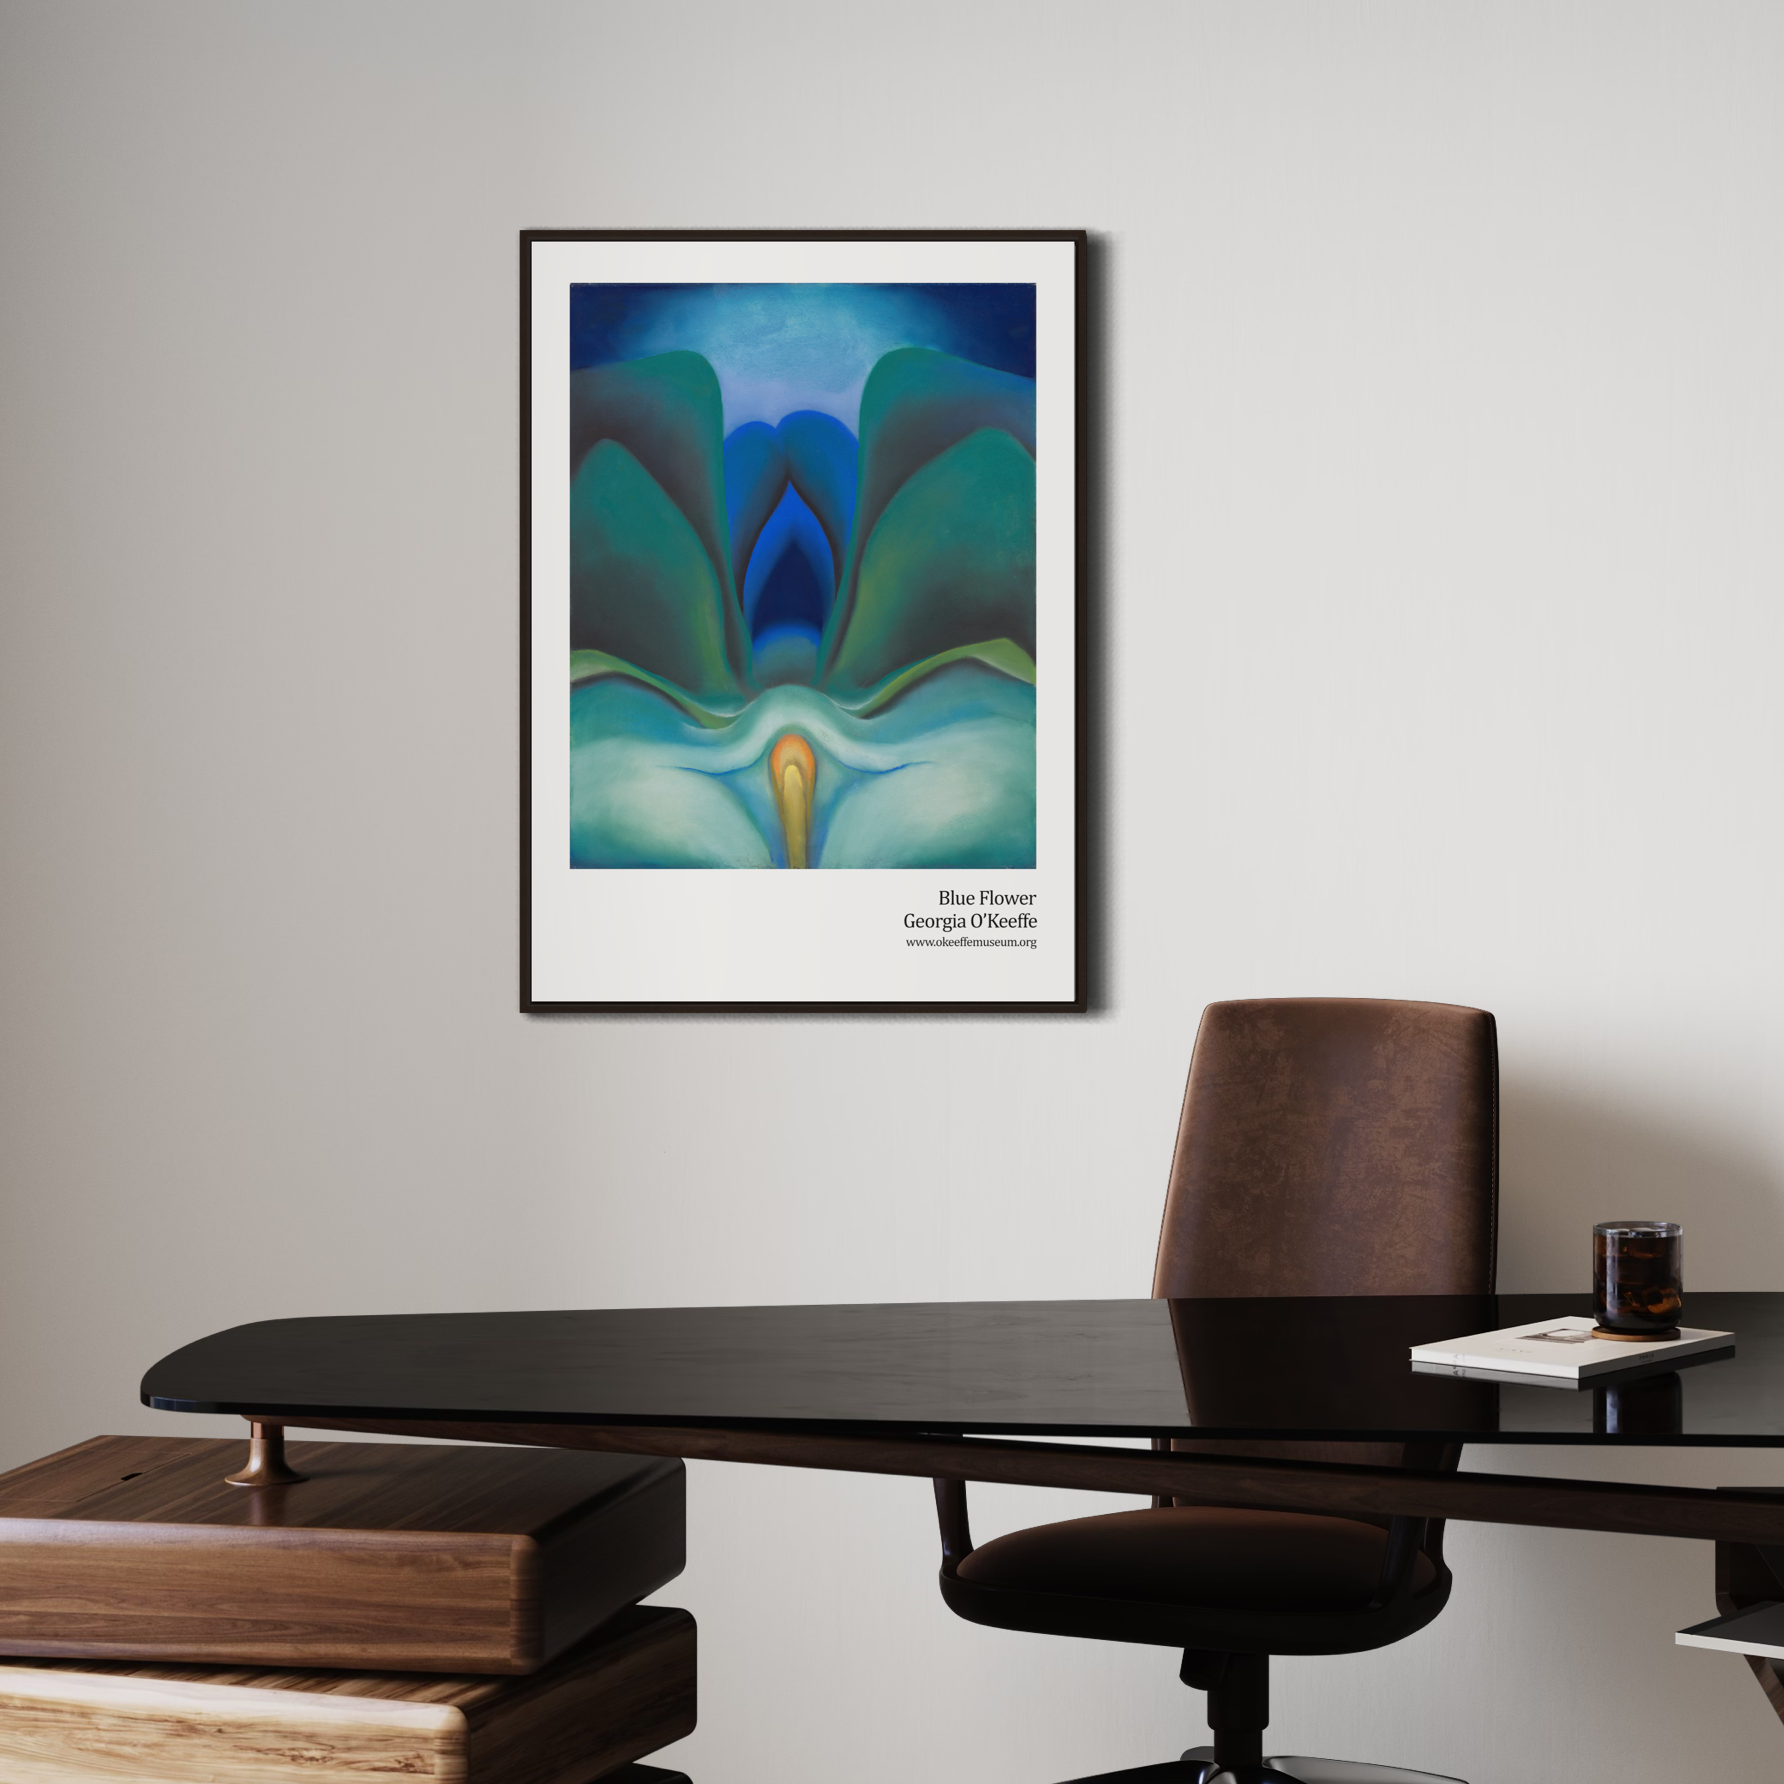 Georgia O'Keeffe Poster - Blue Flower